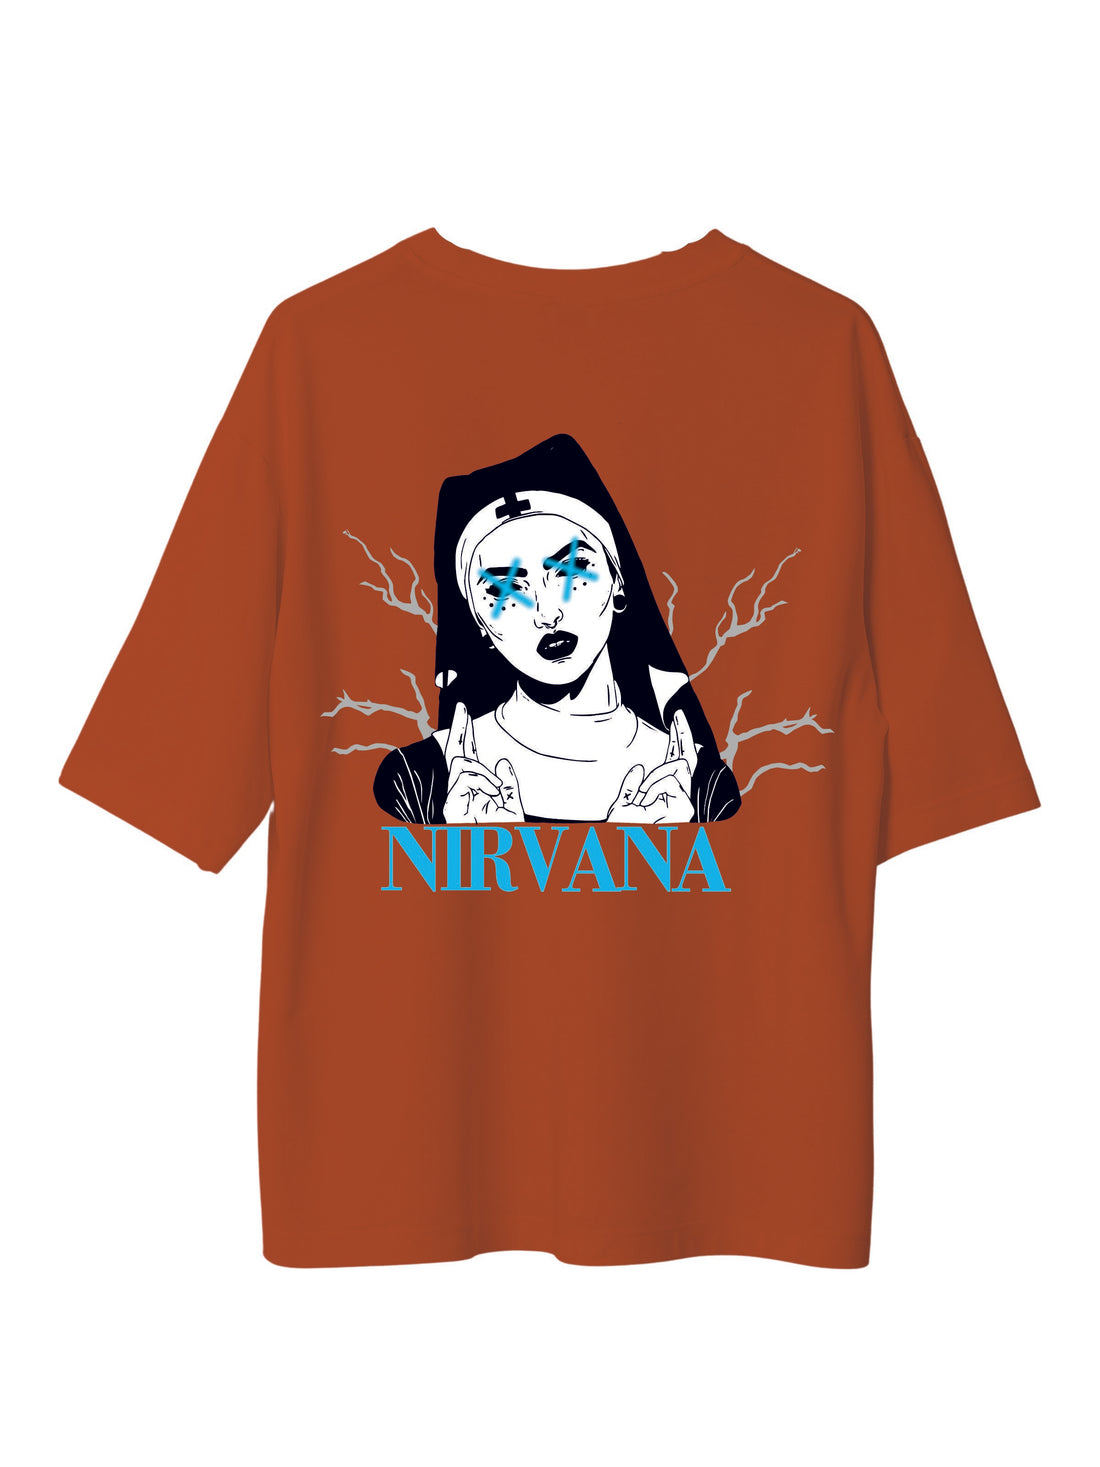 Nirvana The NUN - Burger Bae Oversized  Tee For Men and Women